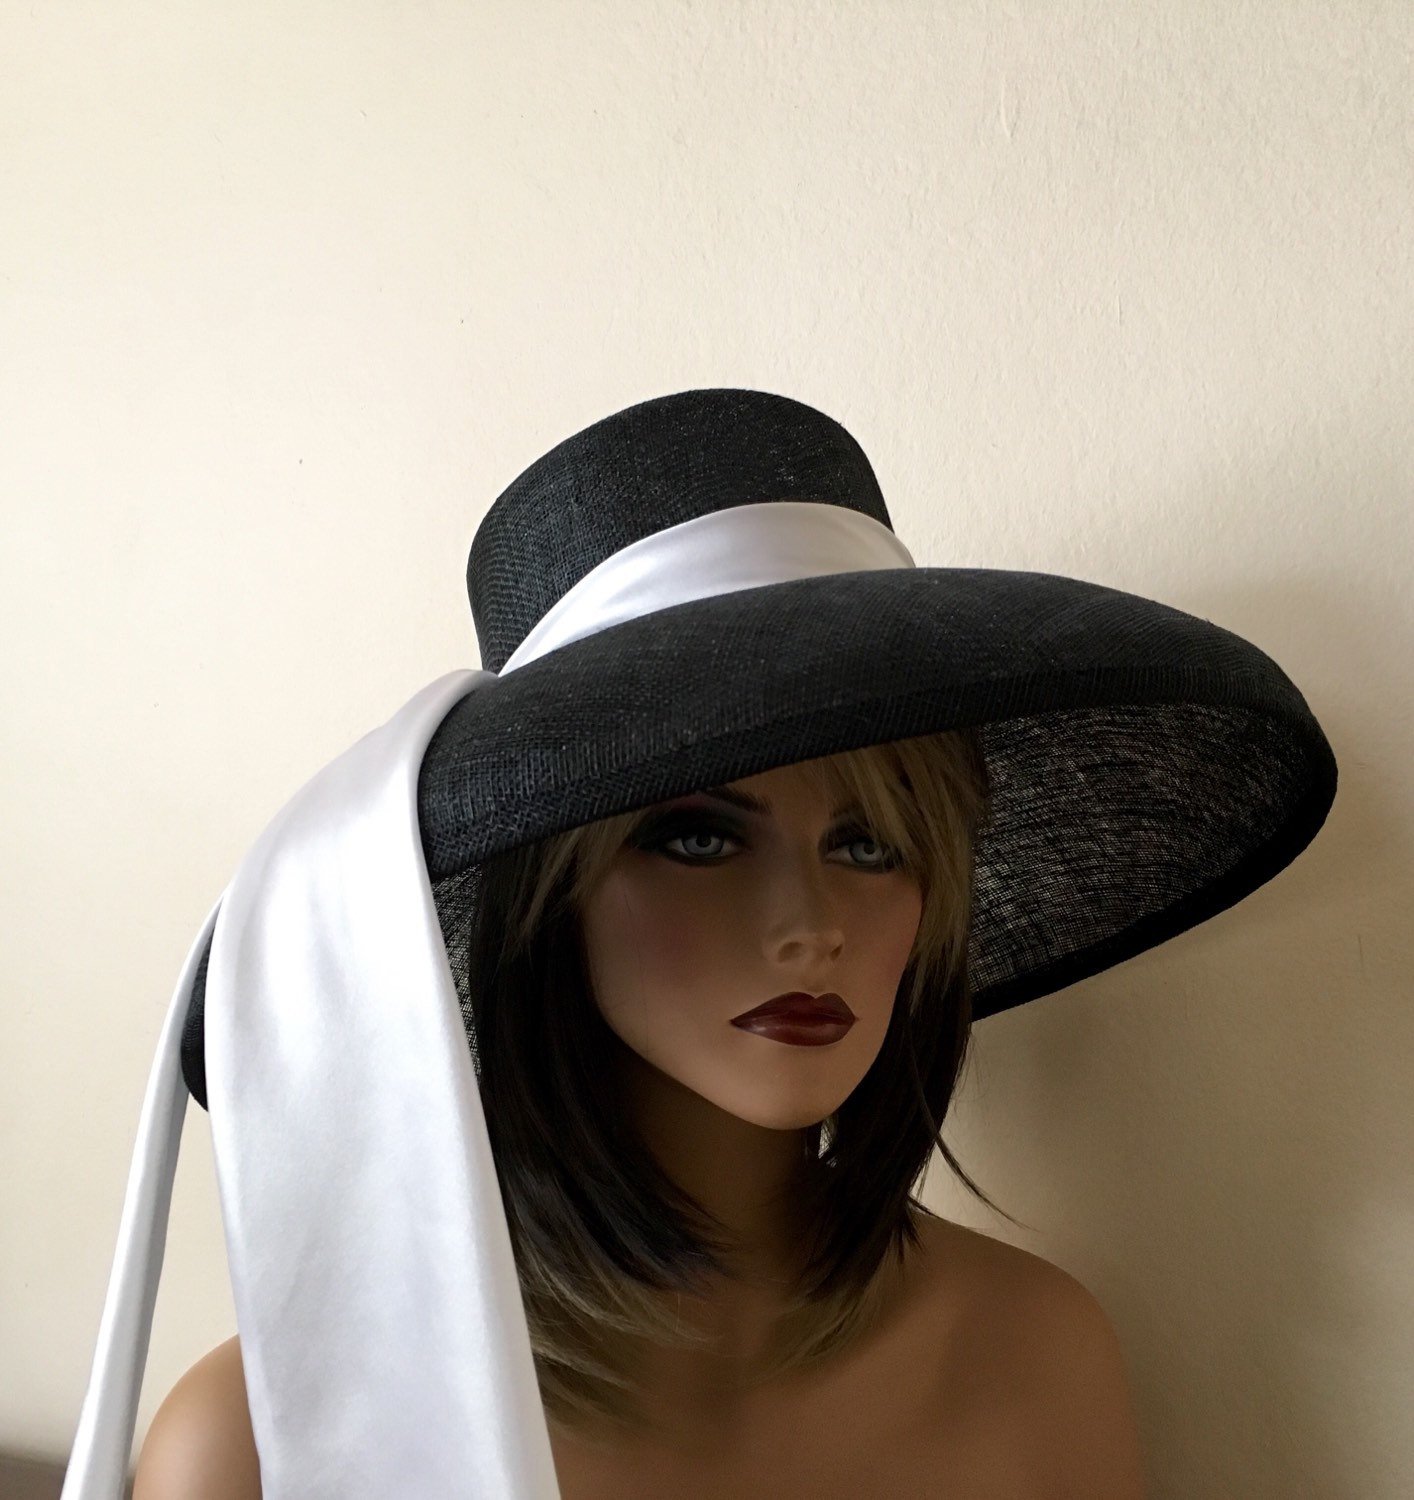 Kentucky Derby, Royal  Ascot, Couture black hat for the races, tea parties, wedding  " Audrey" hat